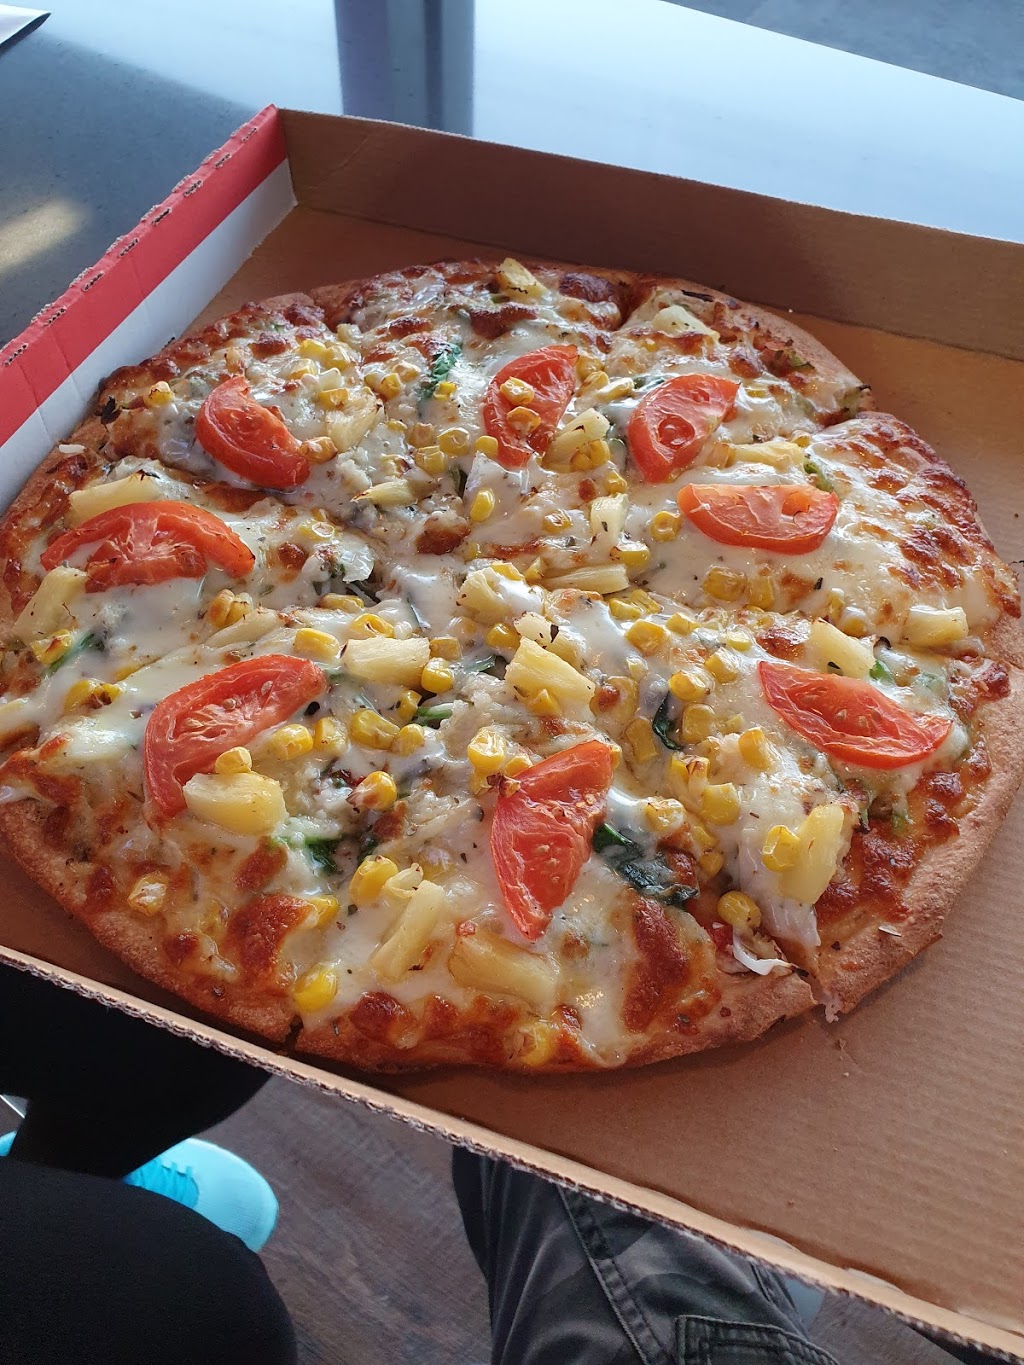 Jessies Pizza Lalor | 25 McKimmies Rd, Thomastown VIC 3075, Australia | Phone: (03) 9465 7100